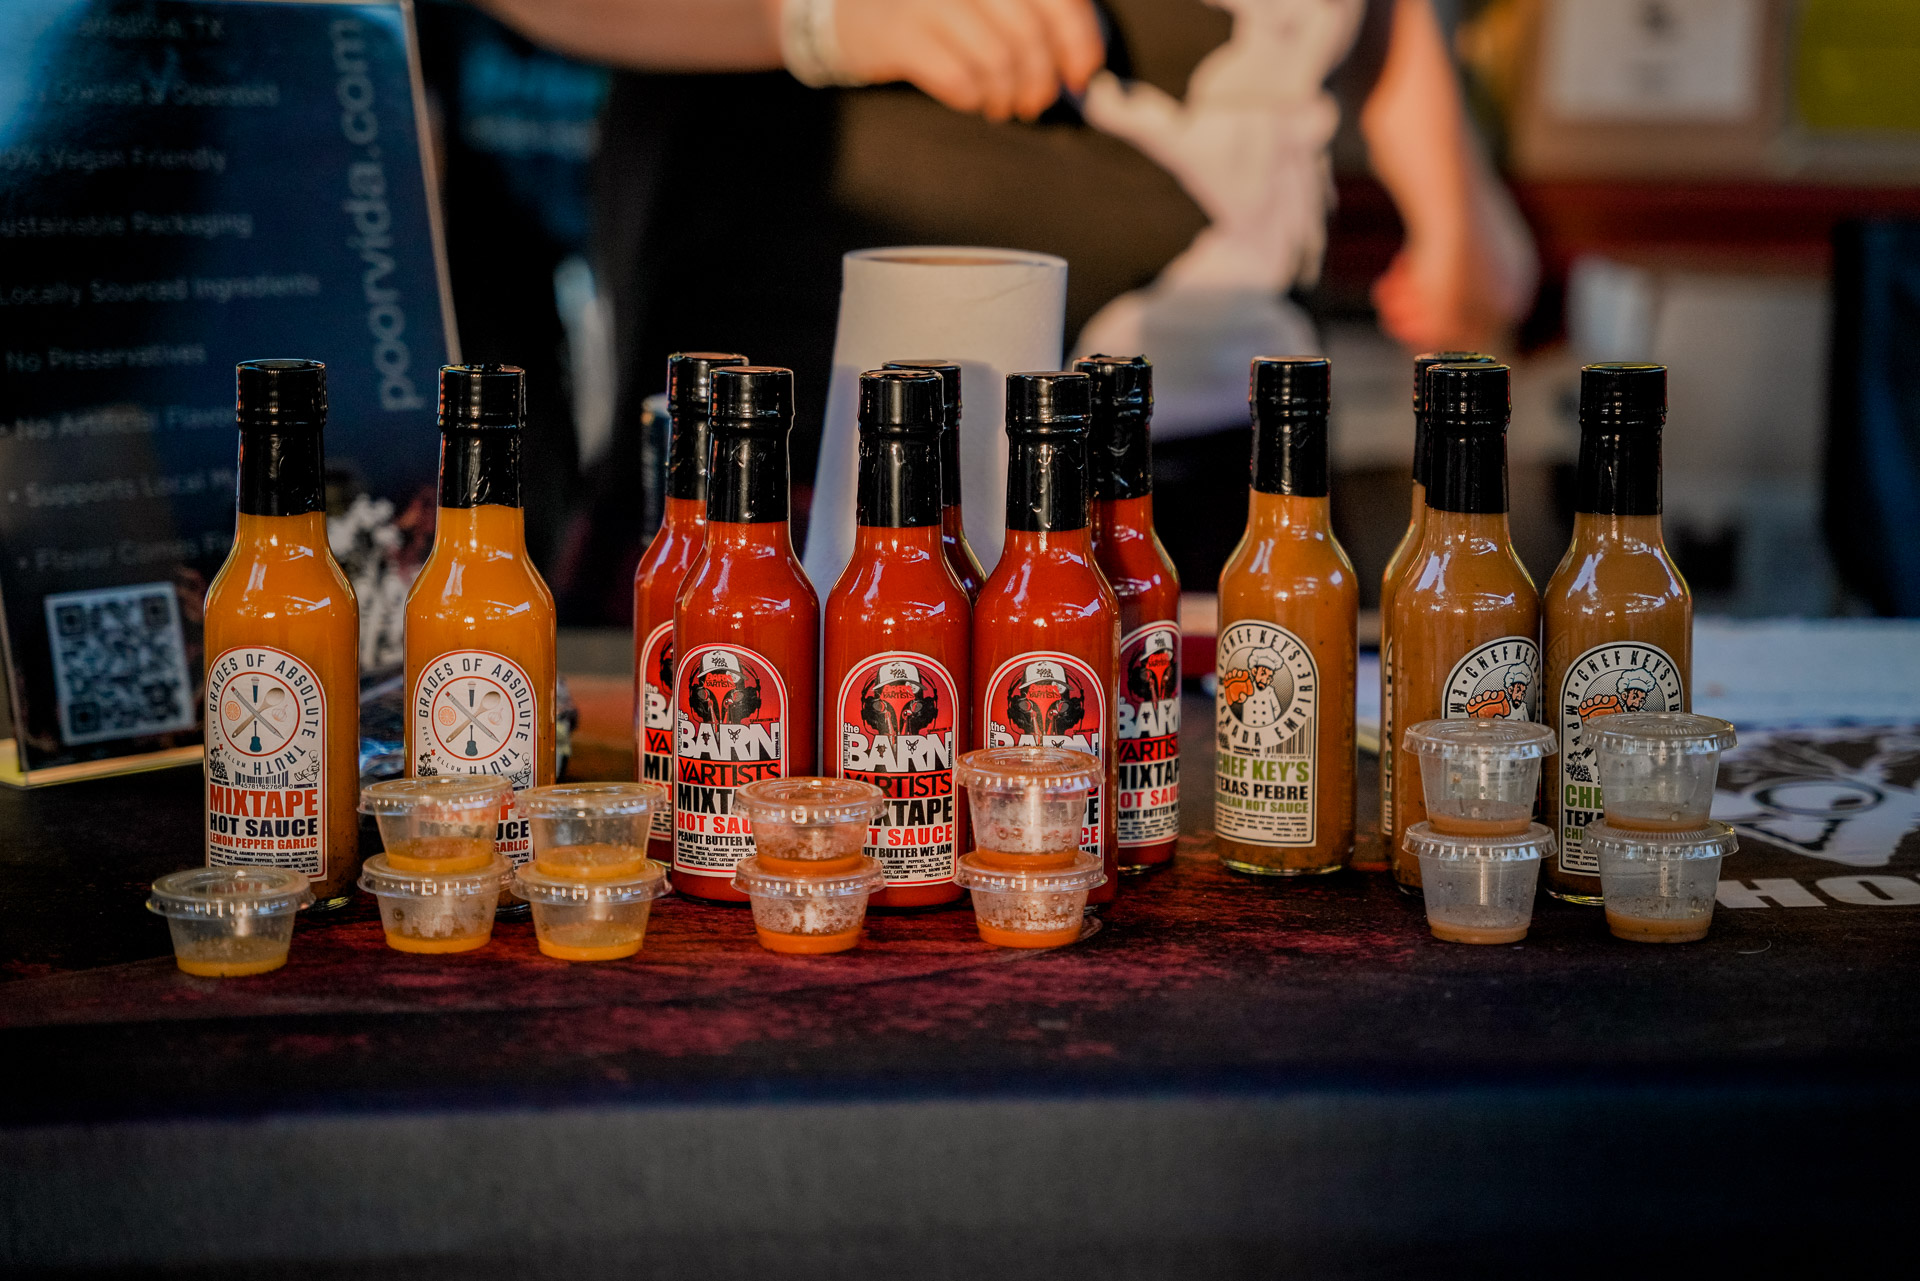 A display of hot sauces